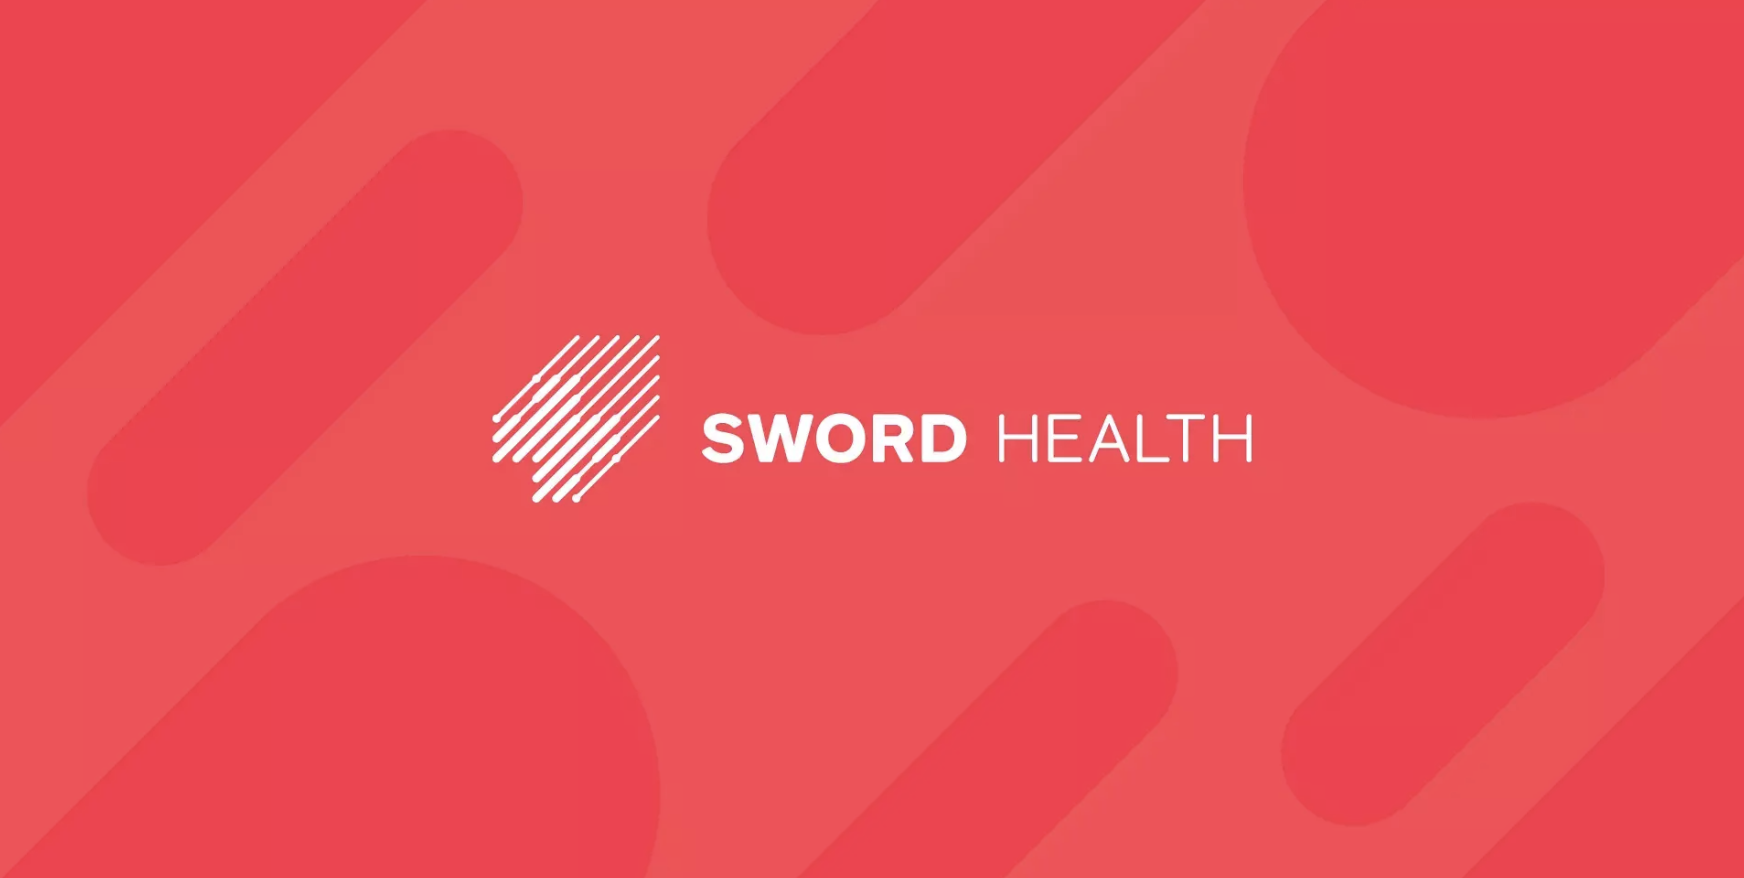 SWORD360 medical data integration platform